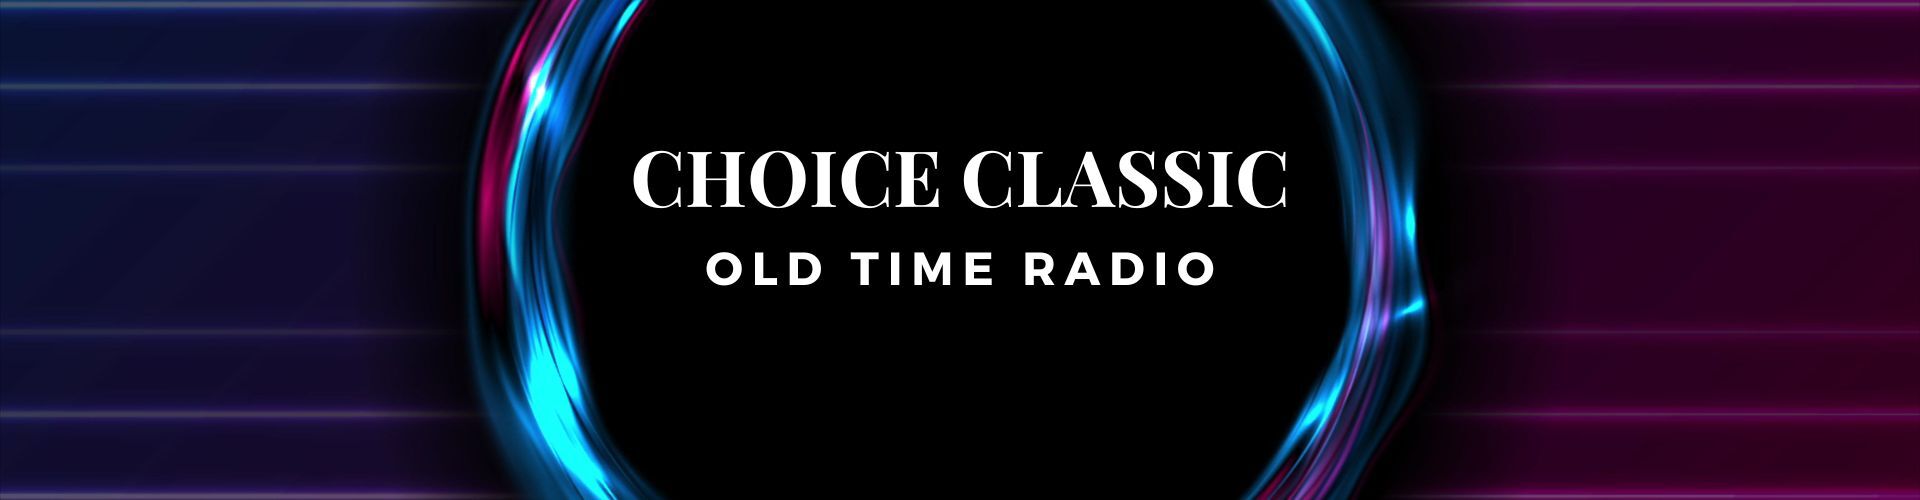 Choice Classic Radio Compilations | Old Time Radio